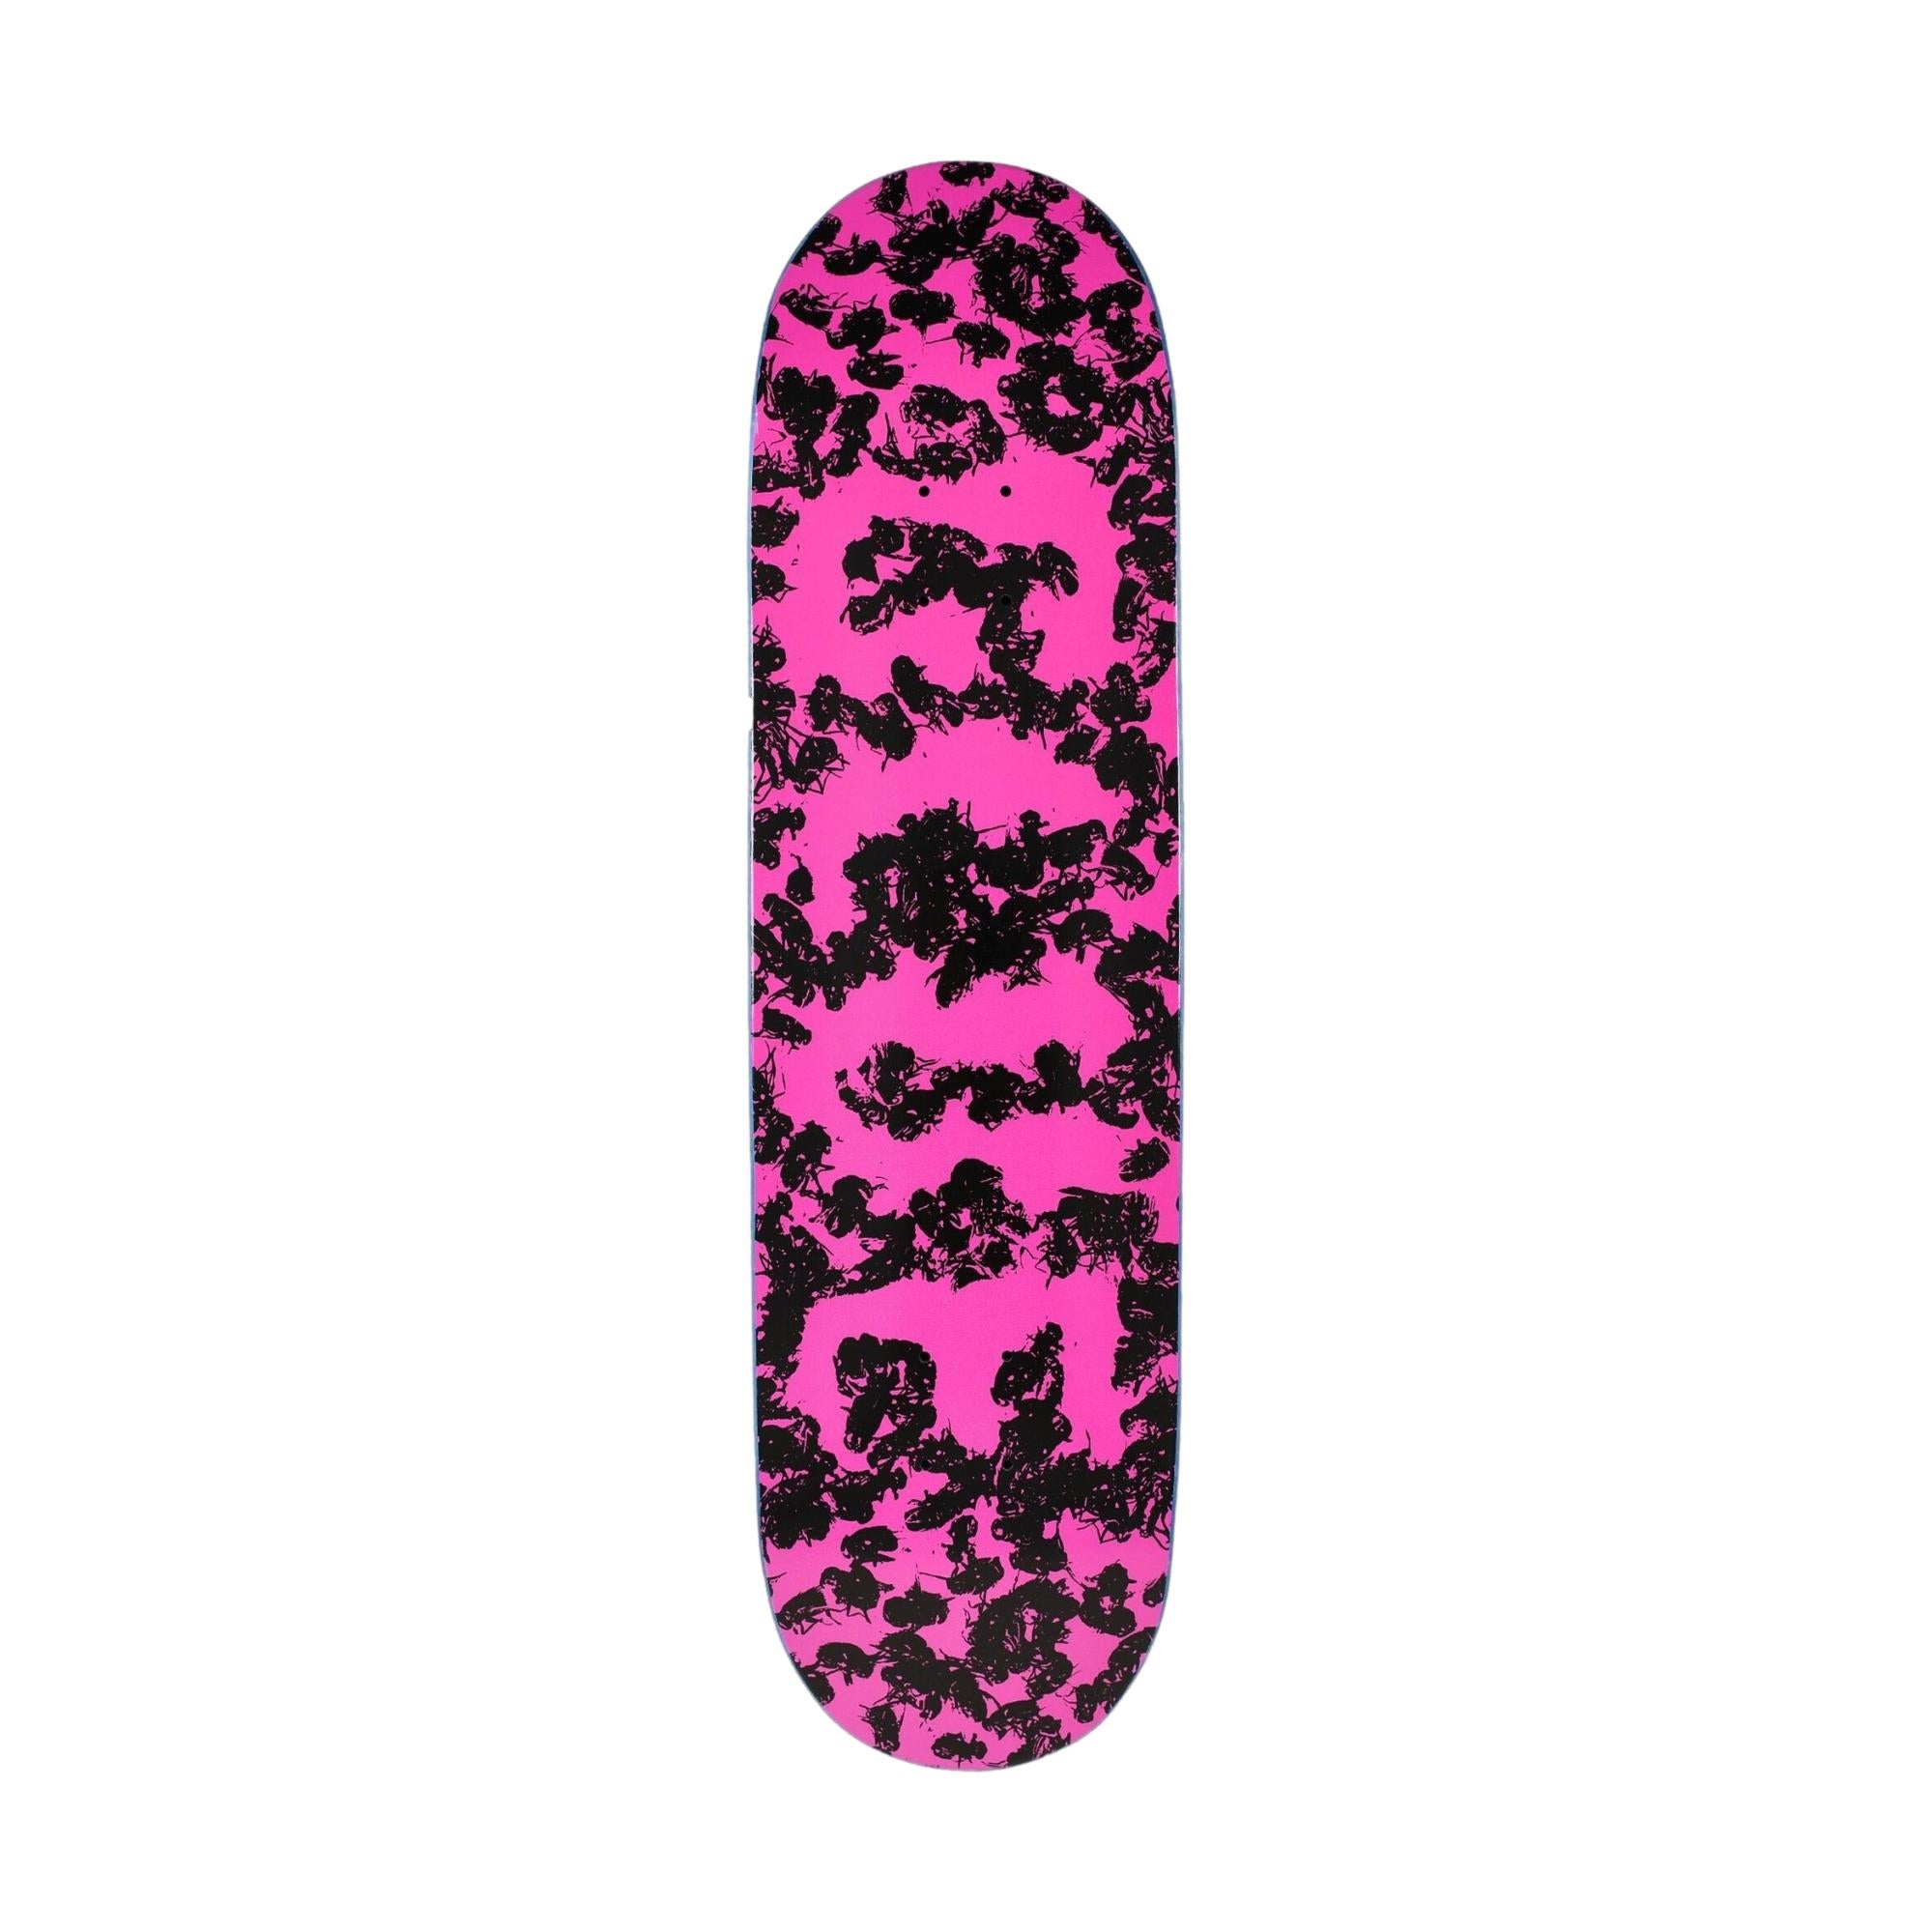 Glue Swarm 8.75" Pink Deck - Venue Skateboards